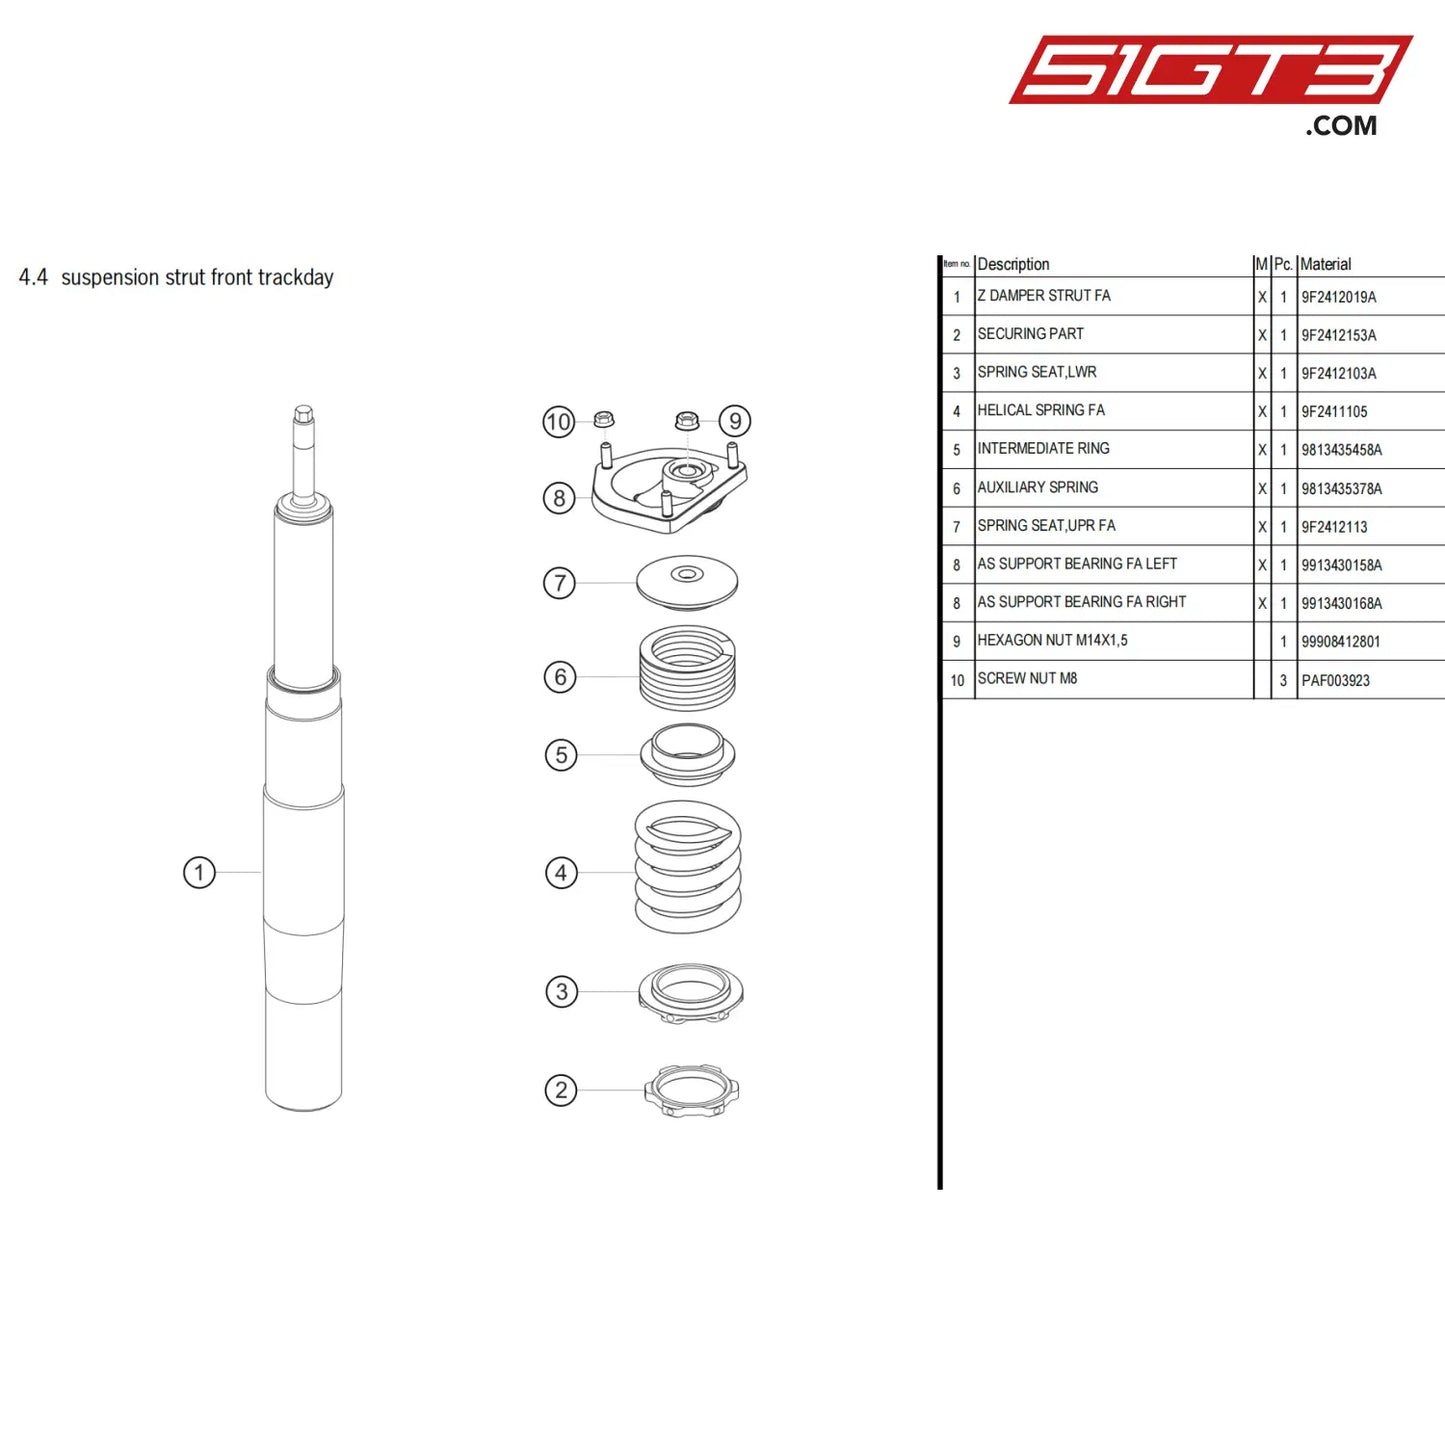 Intermediate Ring - 9813435458A [Porsche 718 Cayman Gt4 Clubsport] Suspension Strut Front Trackday